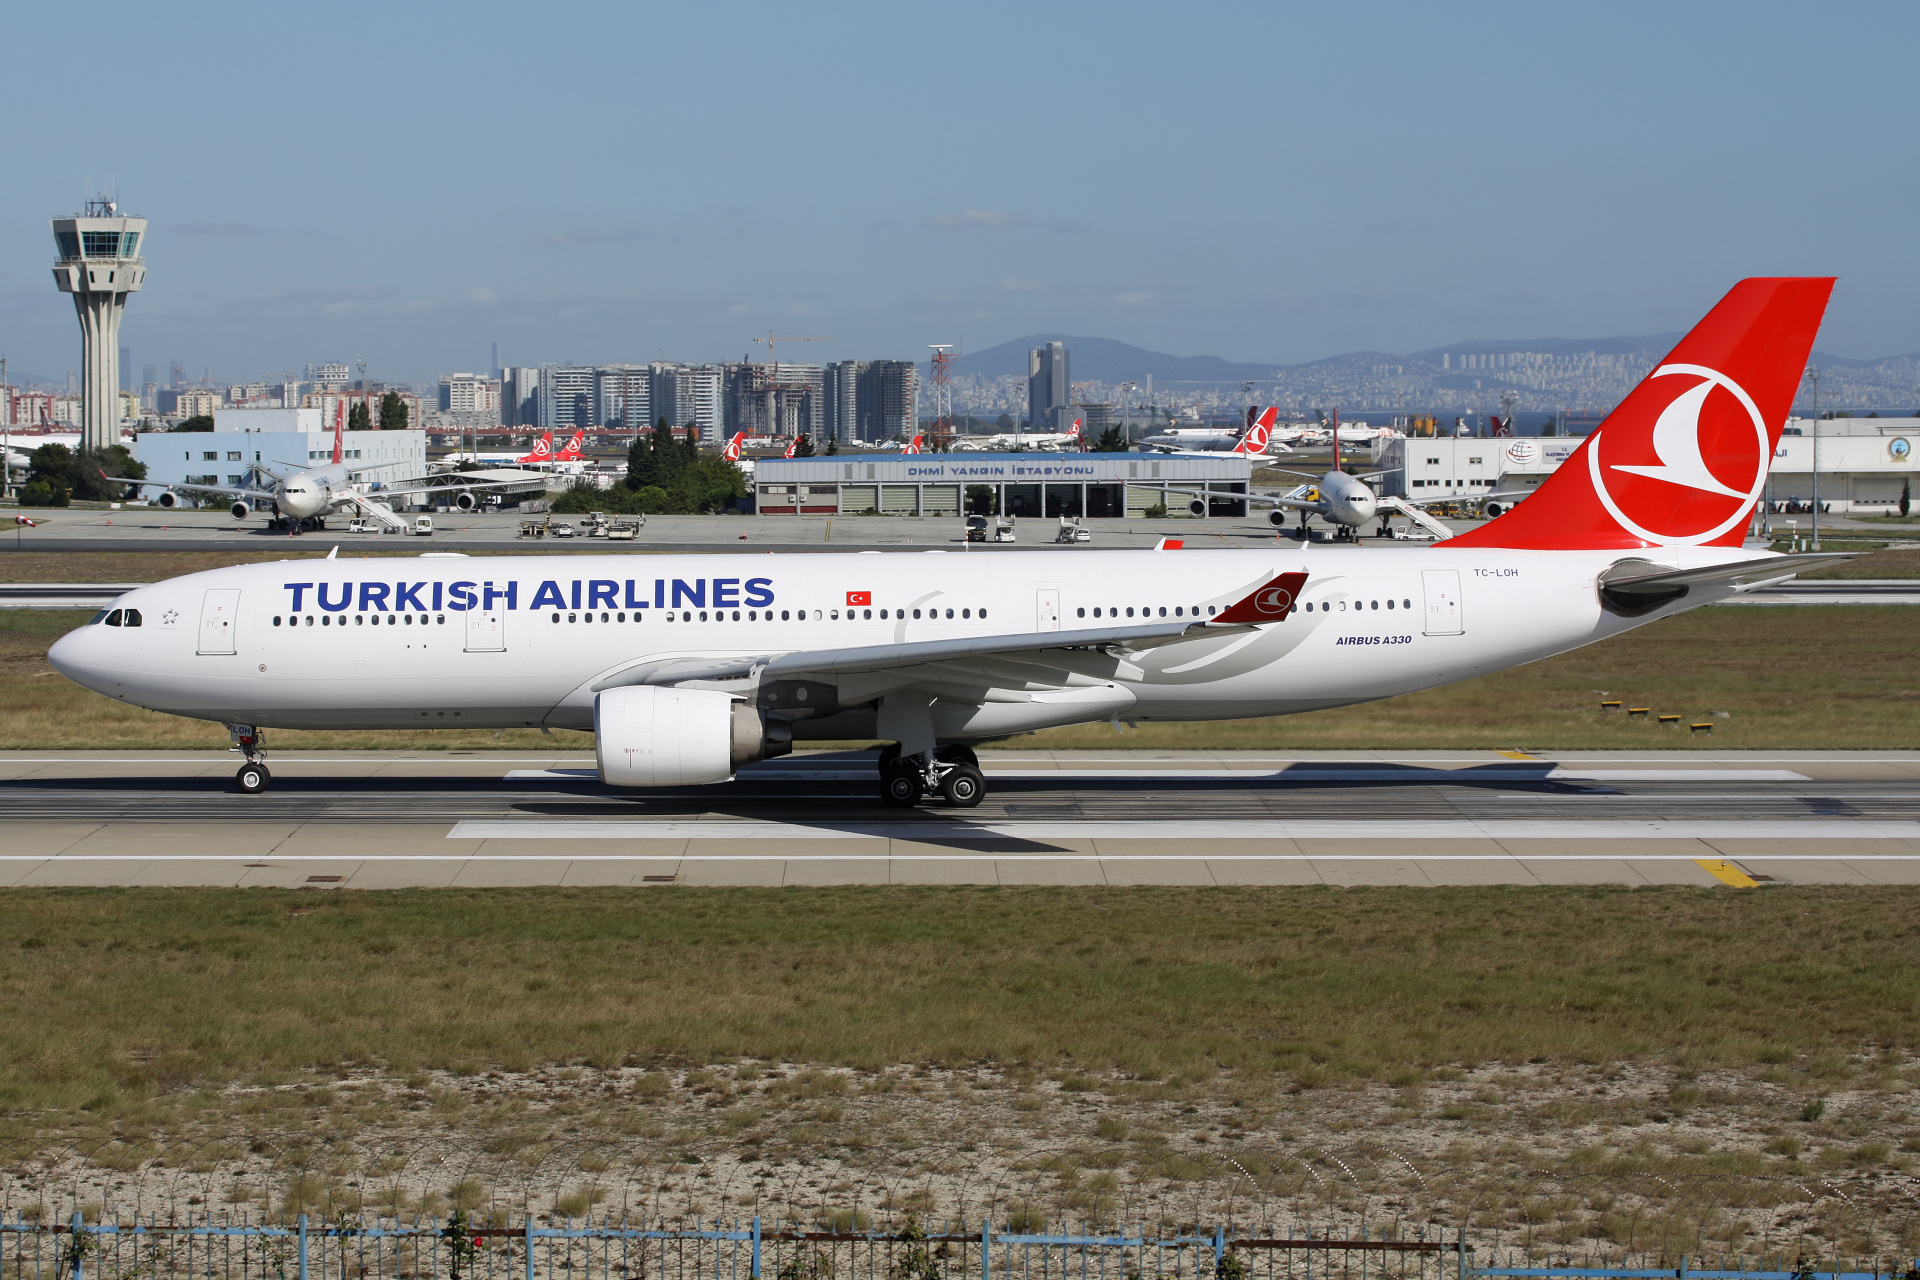 TC-LOH (Samoloty » Port Lotniczy im. Atatürka w Stambule » Airbus A330-200 » THY Turkish Airlines)